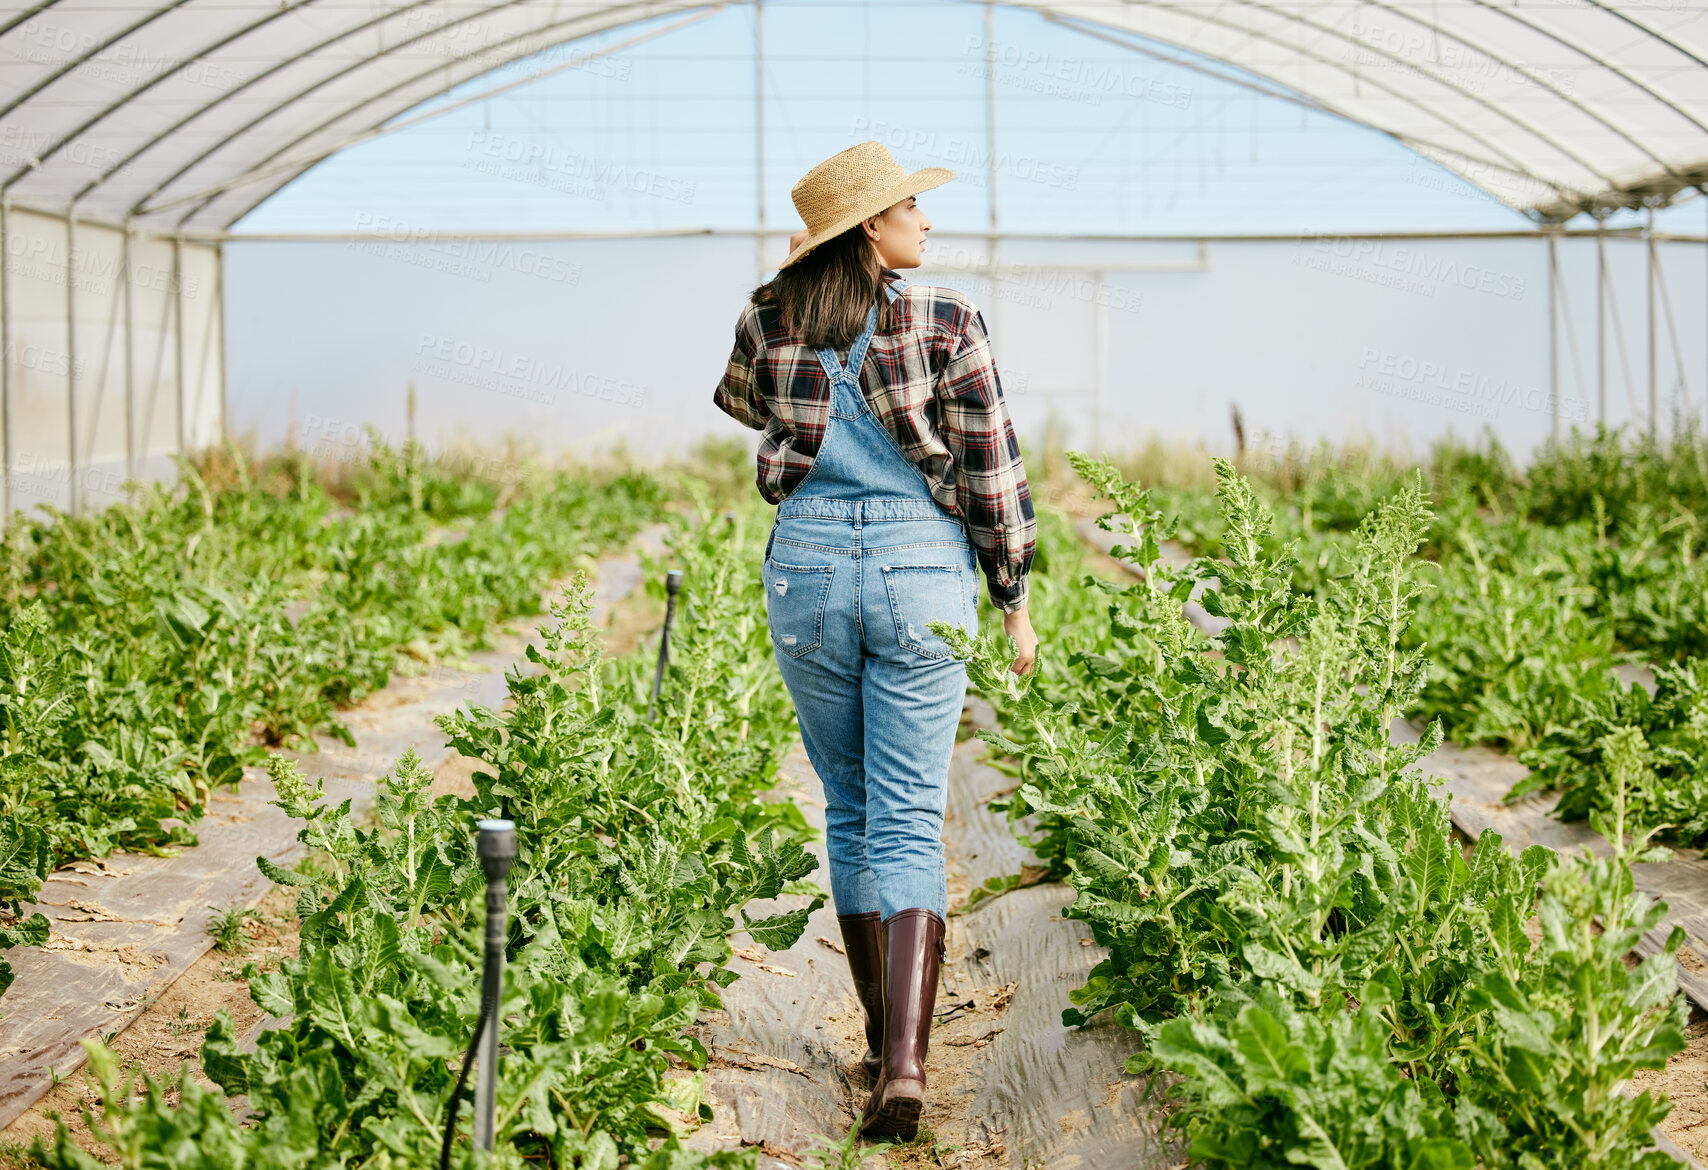 Buy stock photo Shot of a female farmer taking a walk through her greenhouse